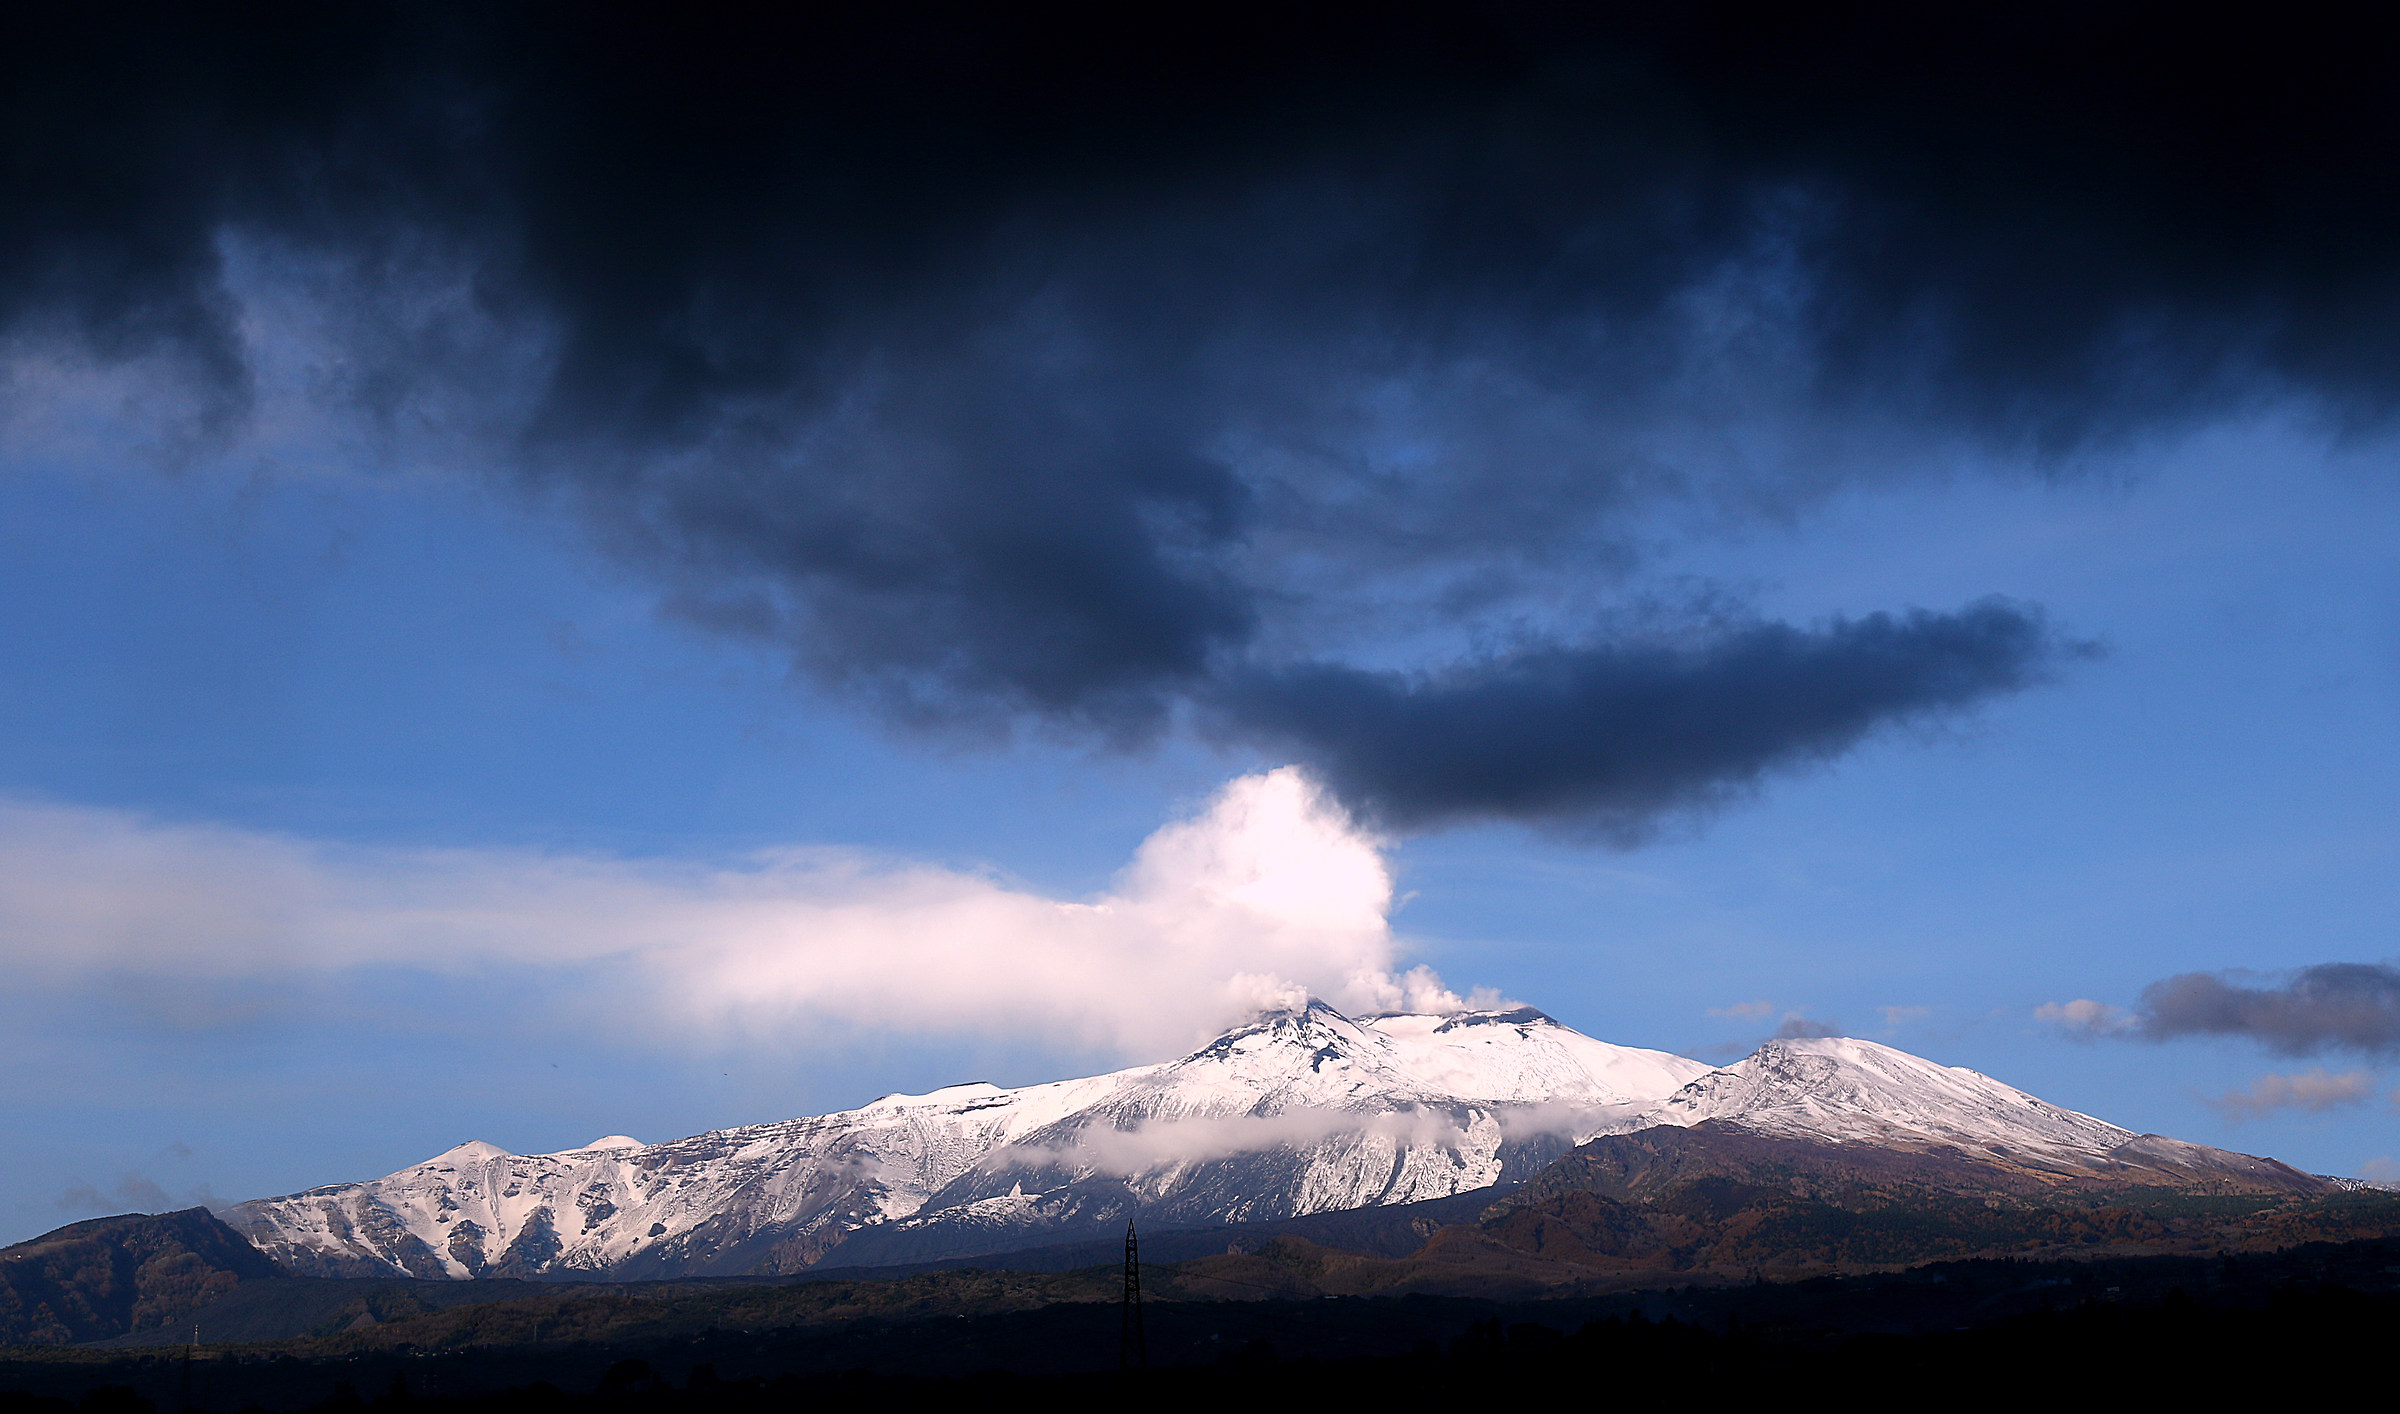 Cieli tempestosi si addensano sull'Etna....